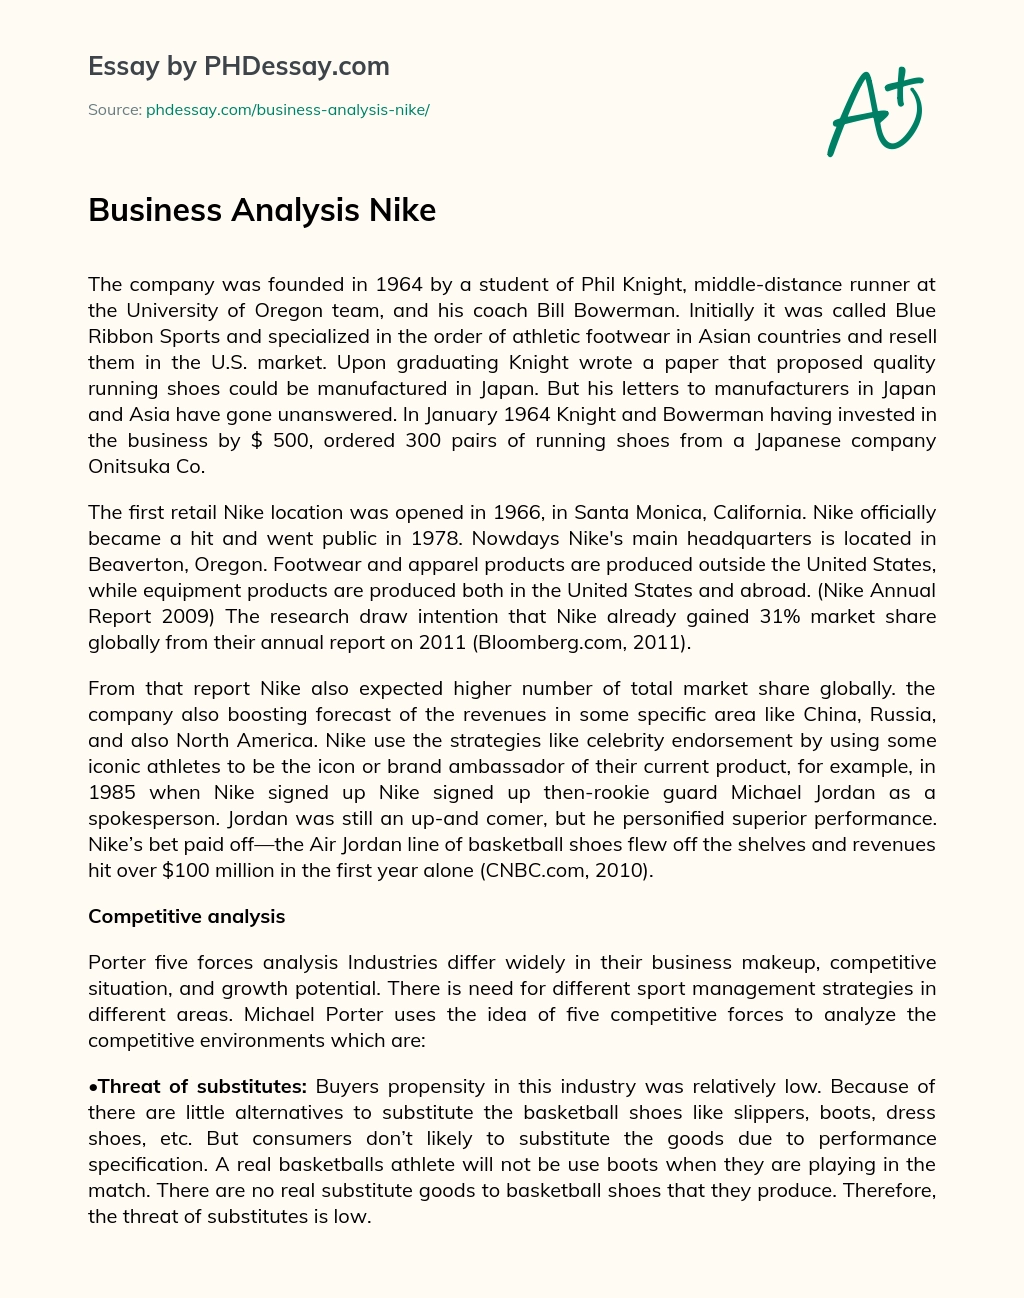 Business Analysis Nike essay